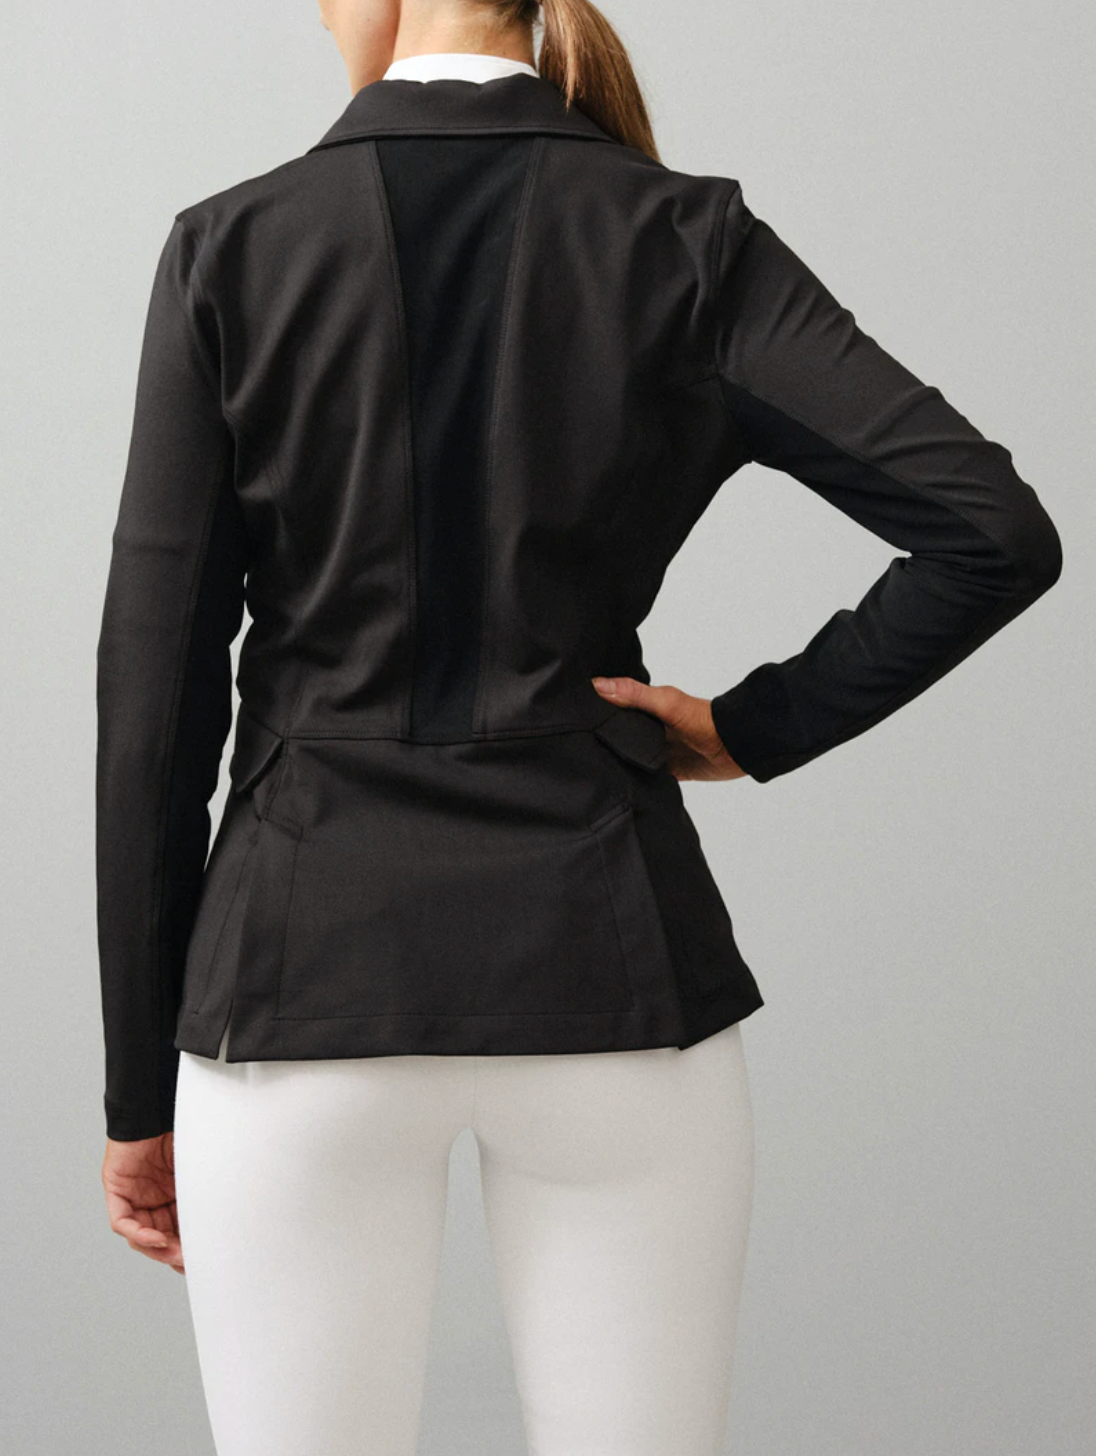 PSOS Lyra Competition Jacket, Black